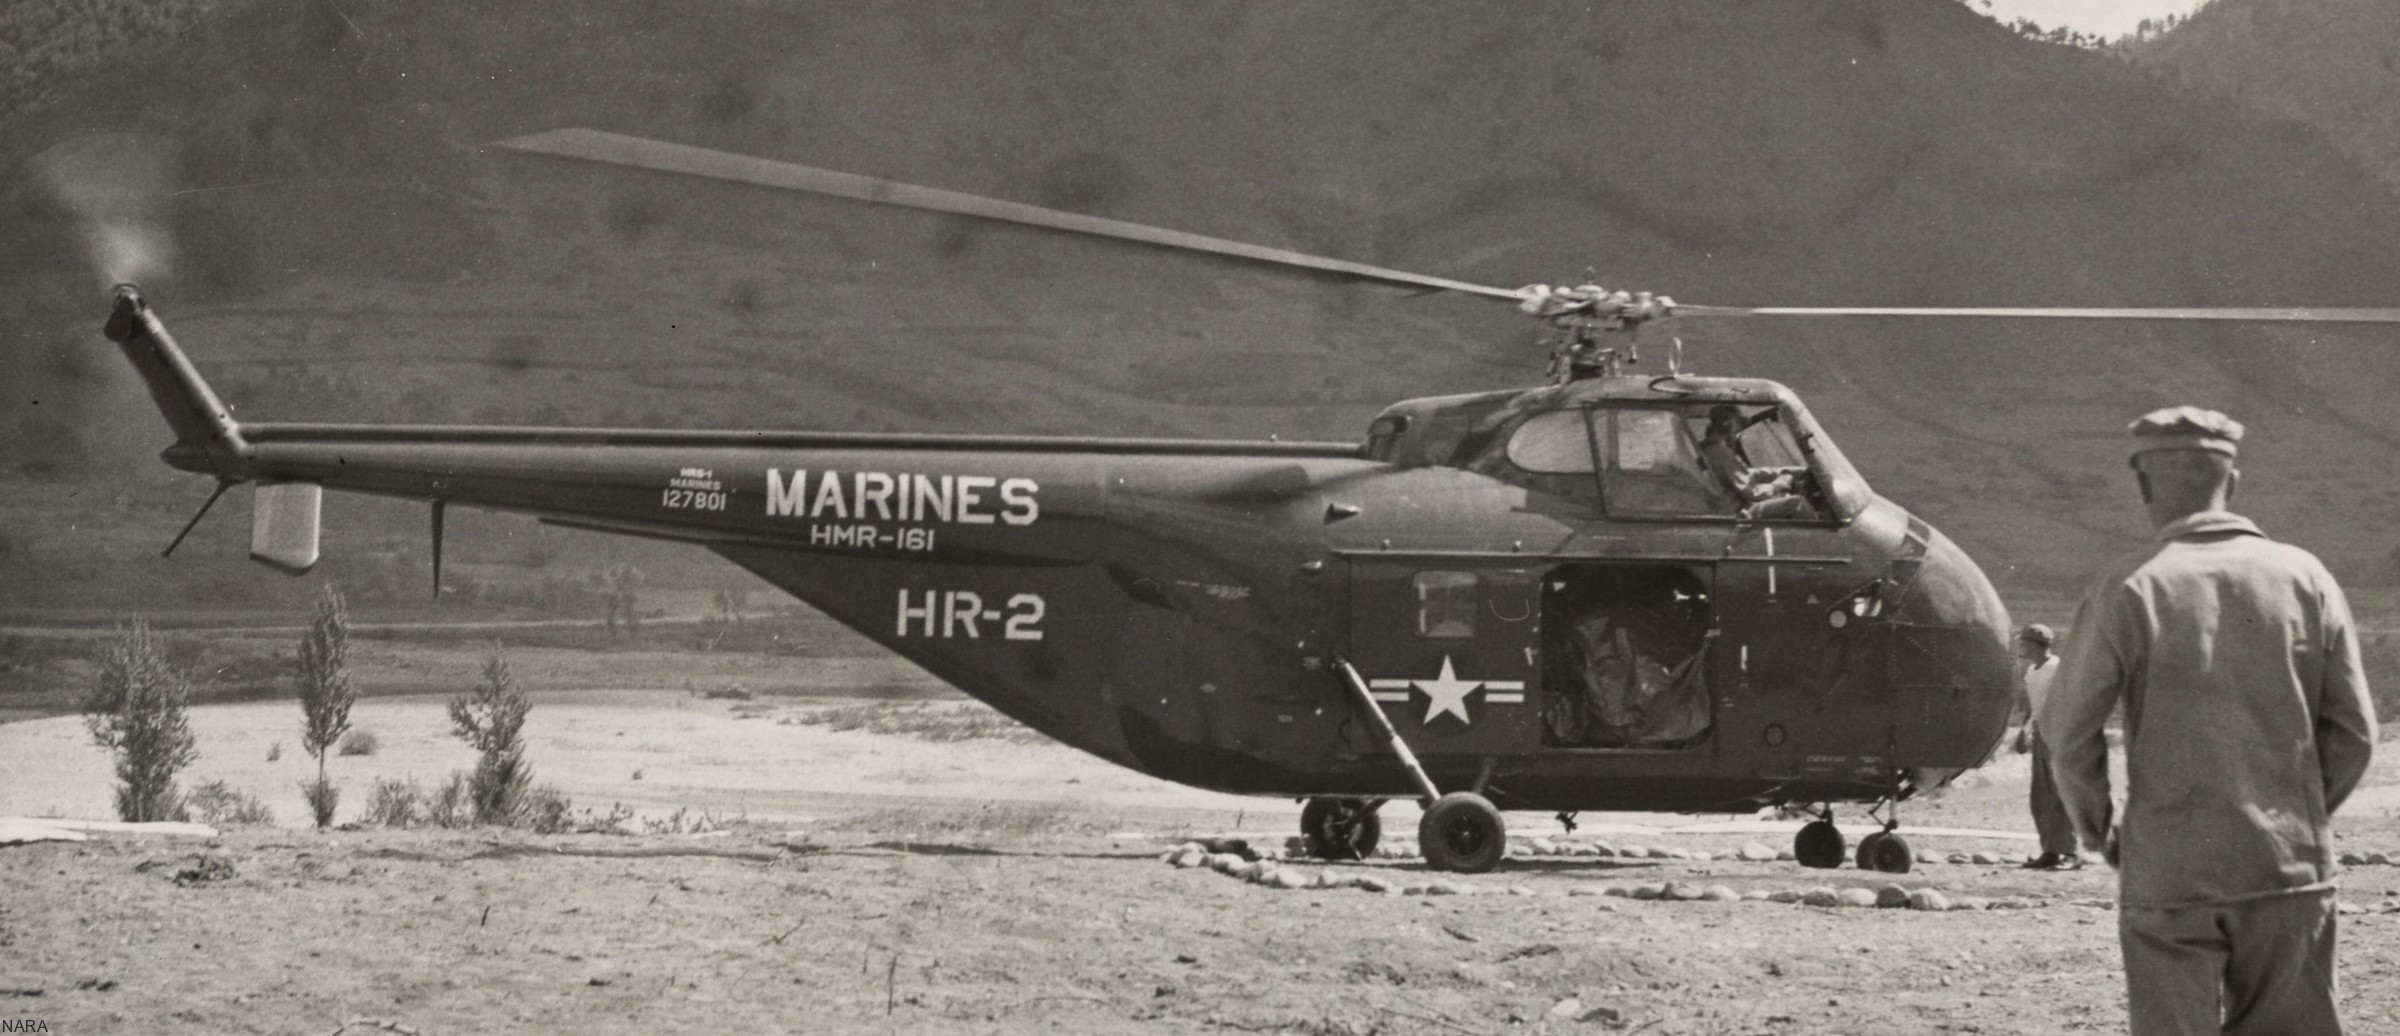 hmr-161 greyhawks marine helicopter transport squadron sikorsky hrs-1 usmc 25